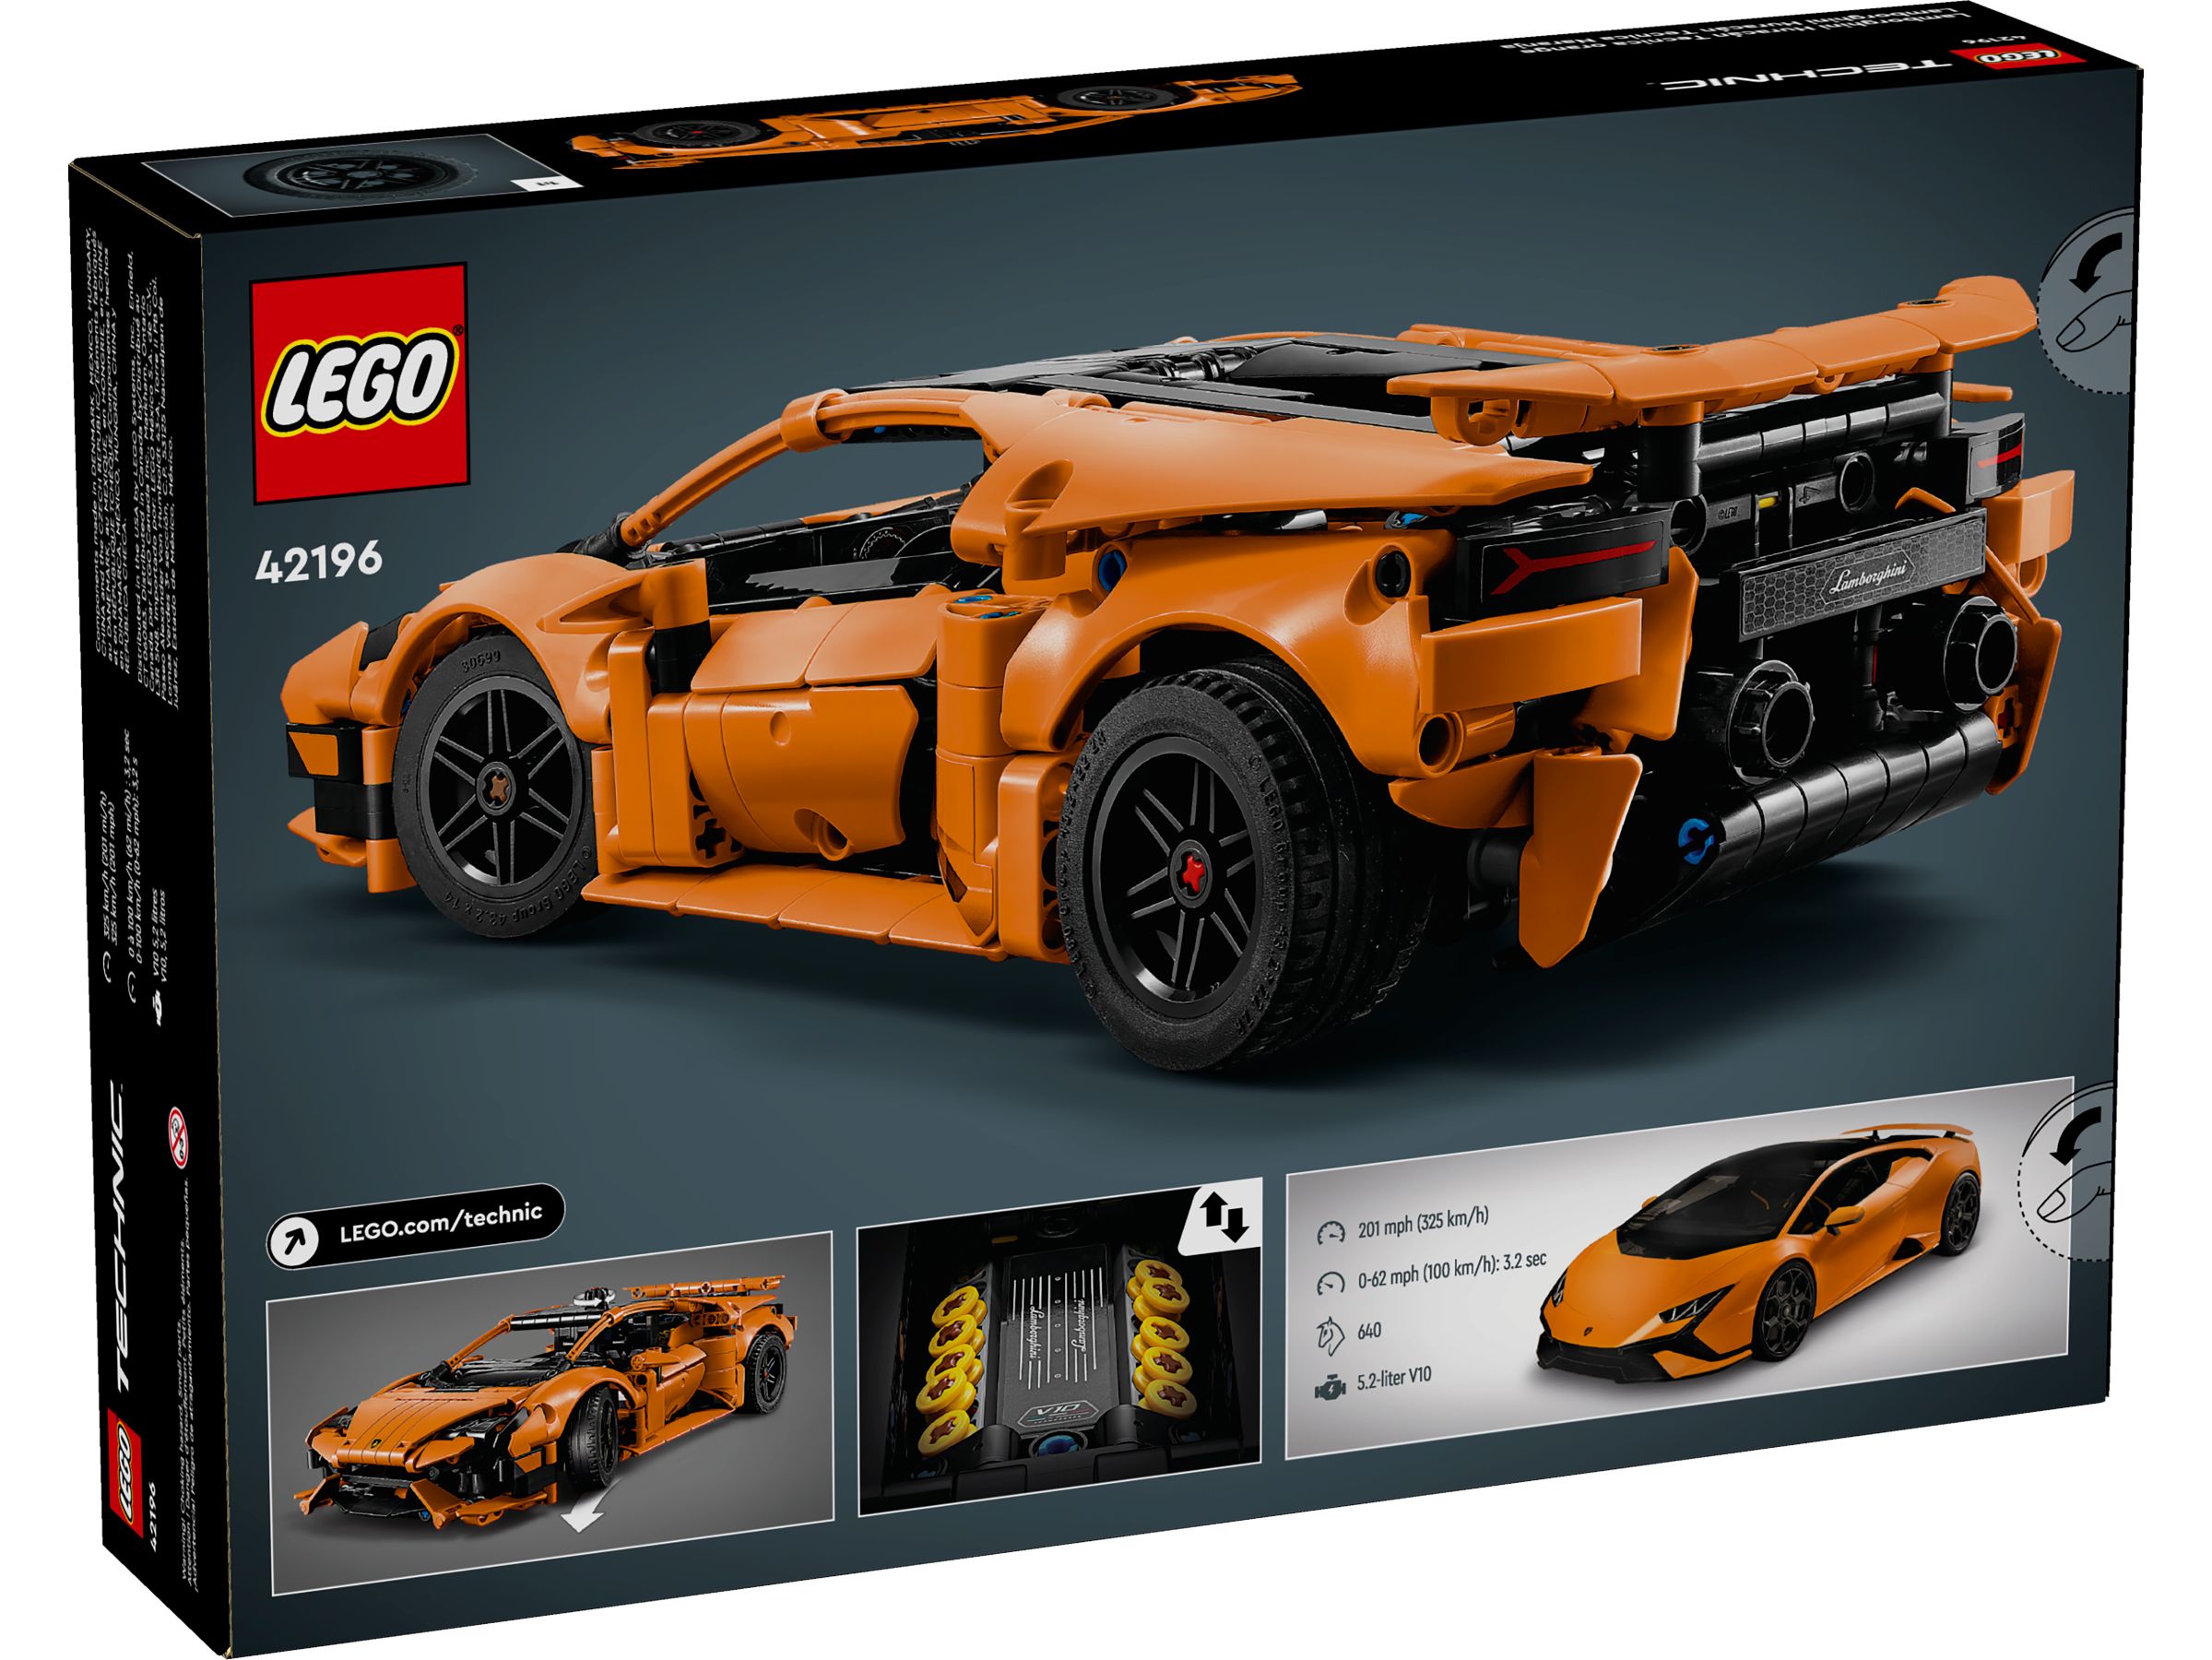 LEGO Technic 42196 Lamborghini Huracán Tecnica Orange LEGO_42196_alt6.jpg